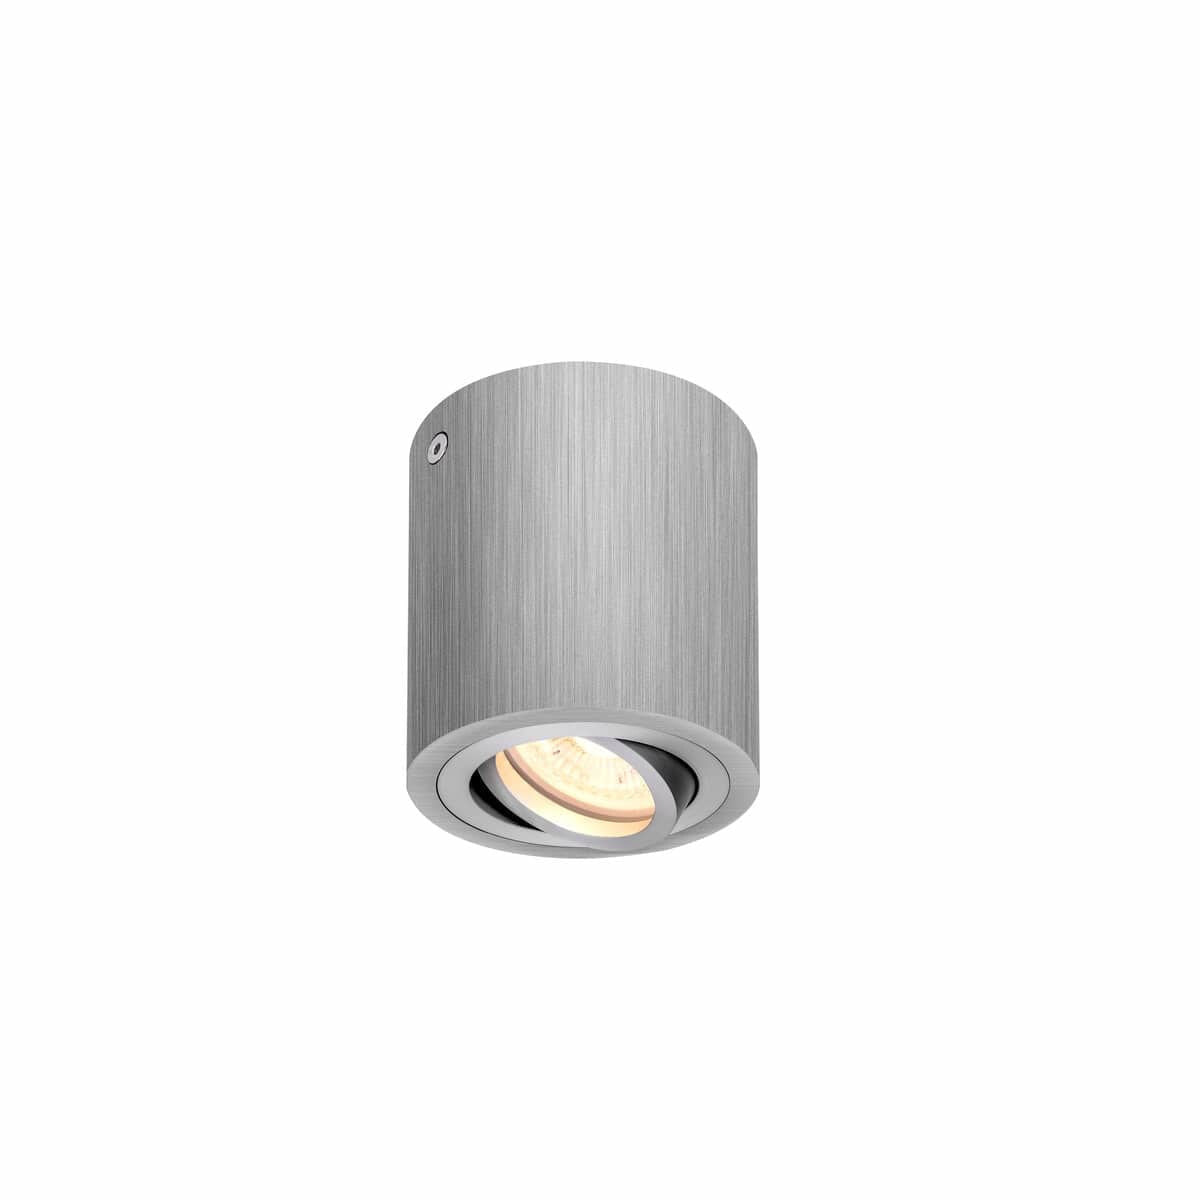 SLV TRILEDO CL - Surfaced lighting spot - GU10 - 1 bulb(s) - 220-240 V - Aluminium